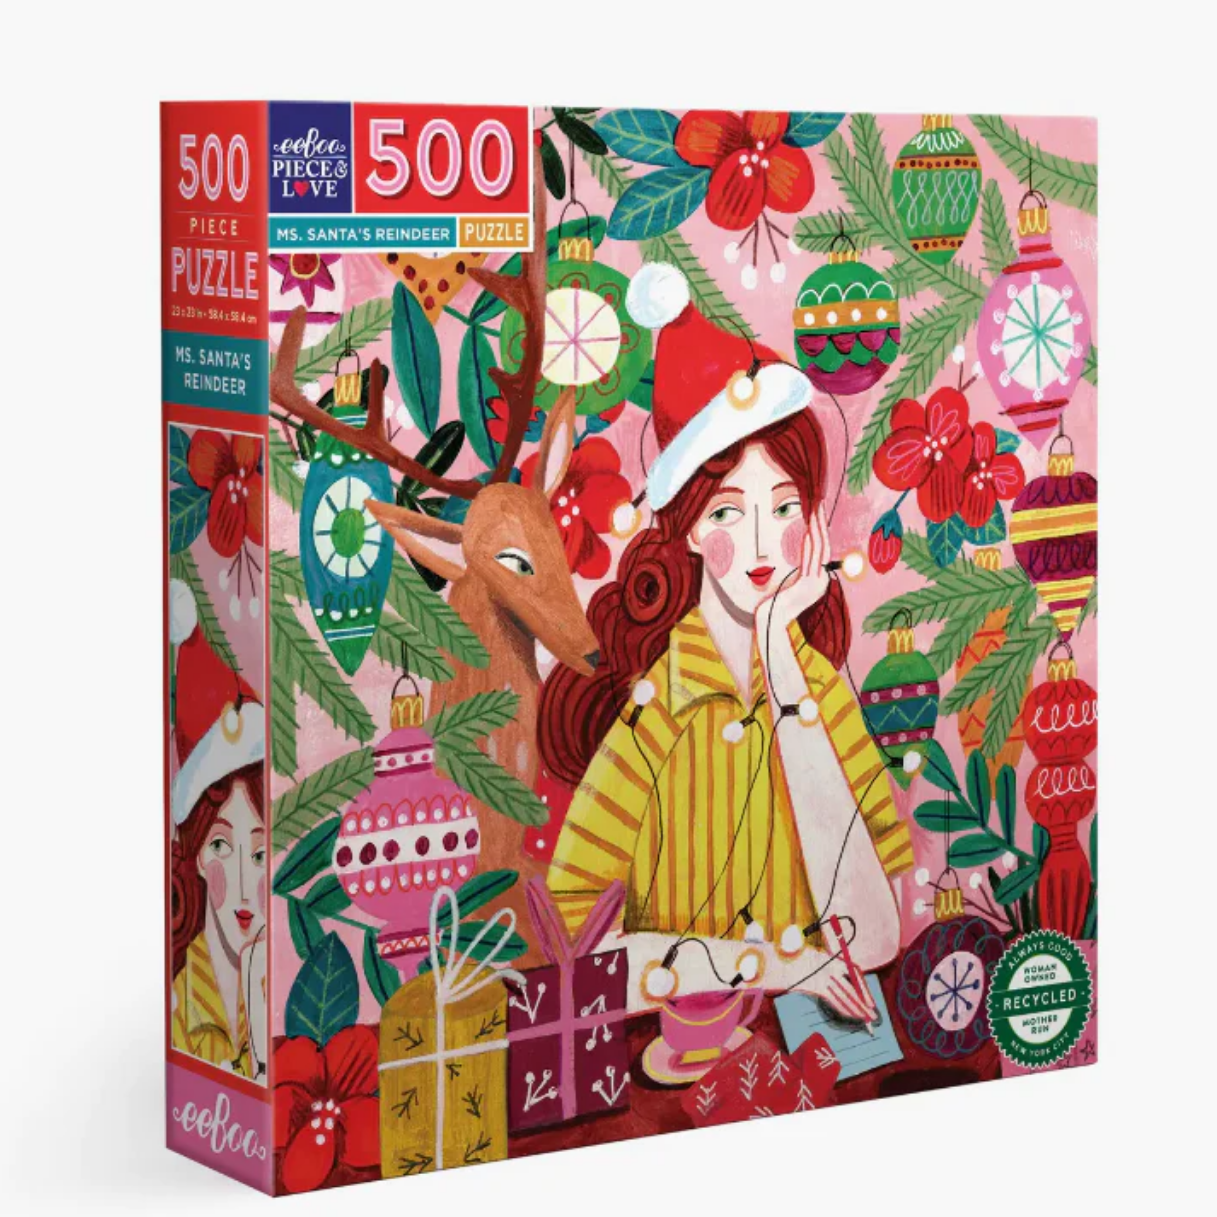 Ms. Santa's Reindeer 500 Piece Puzzle